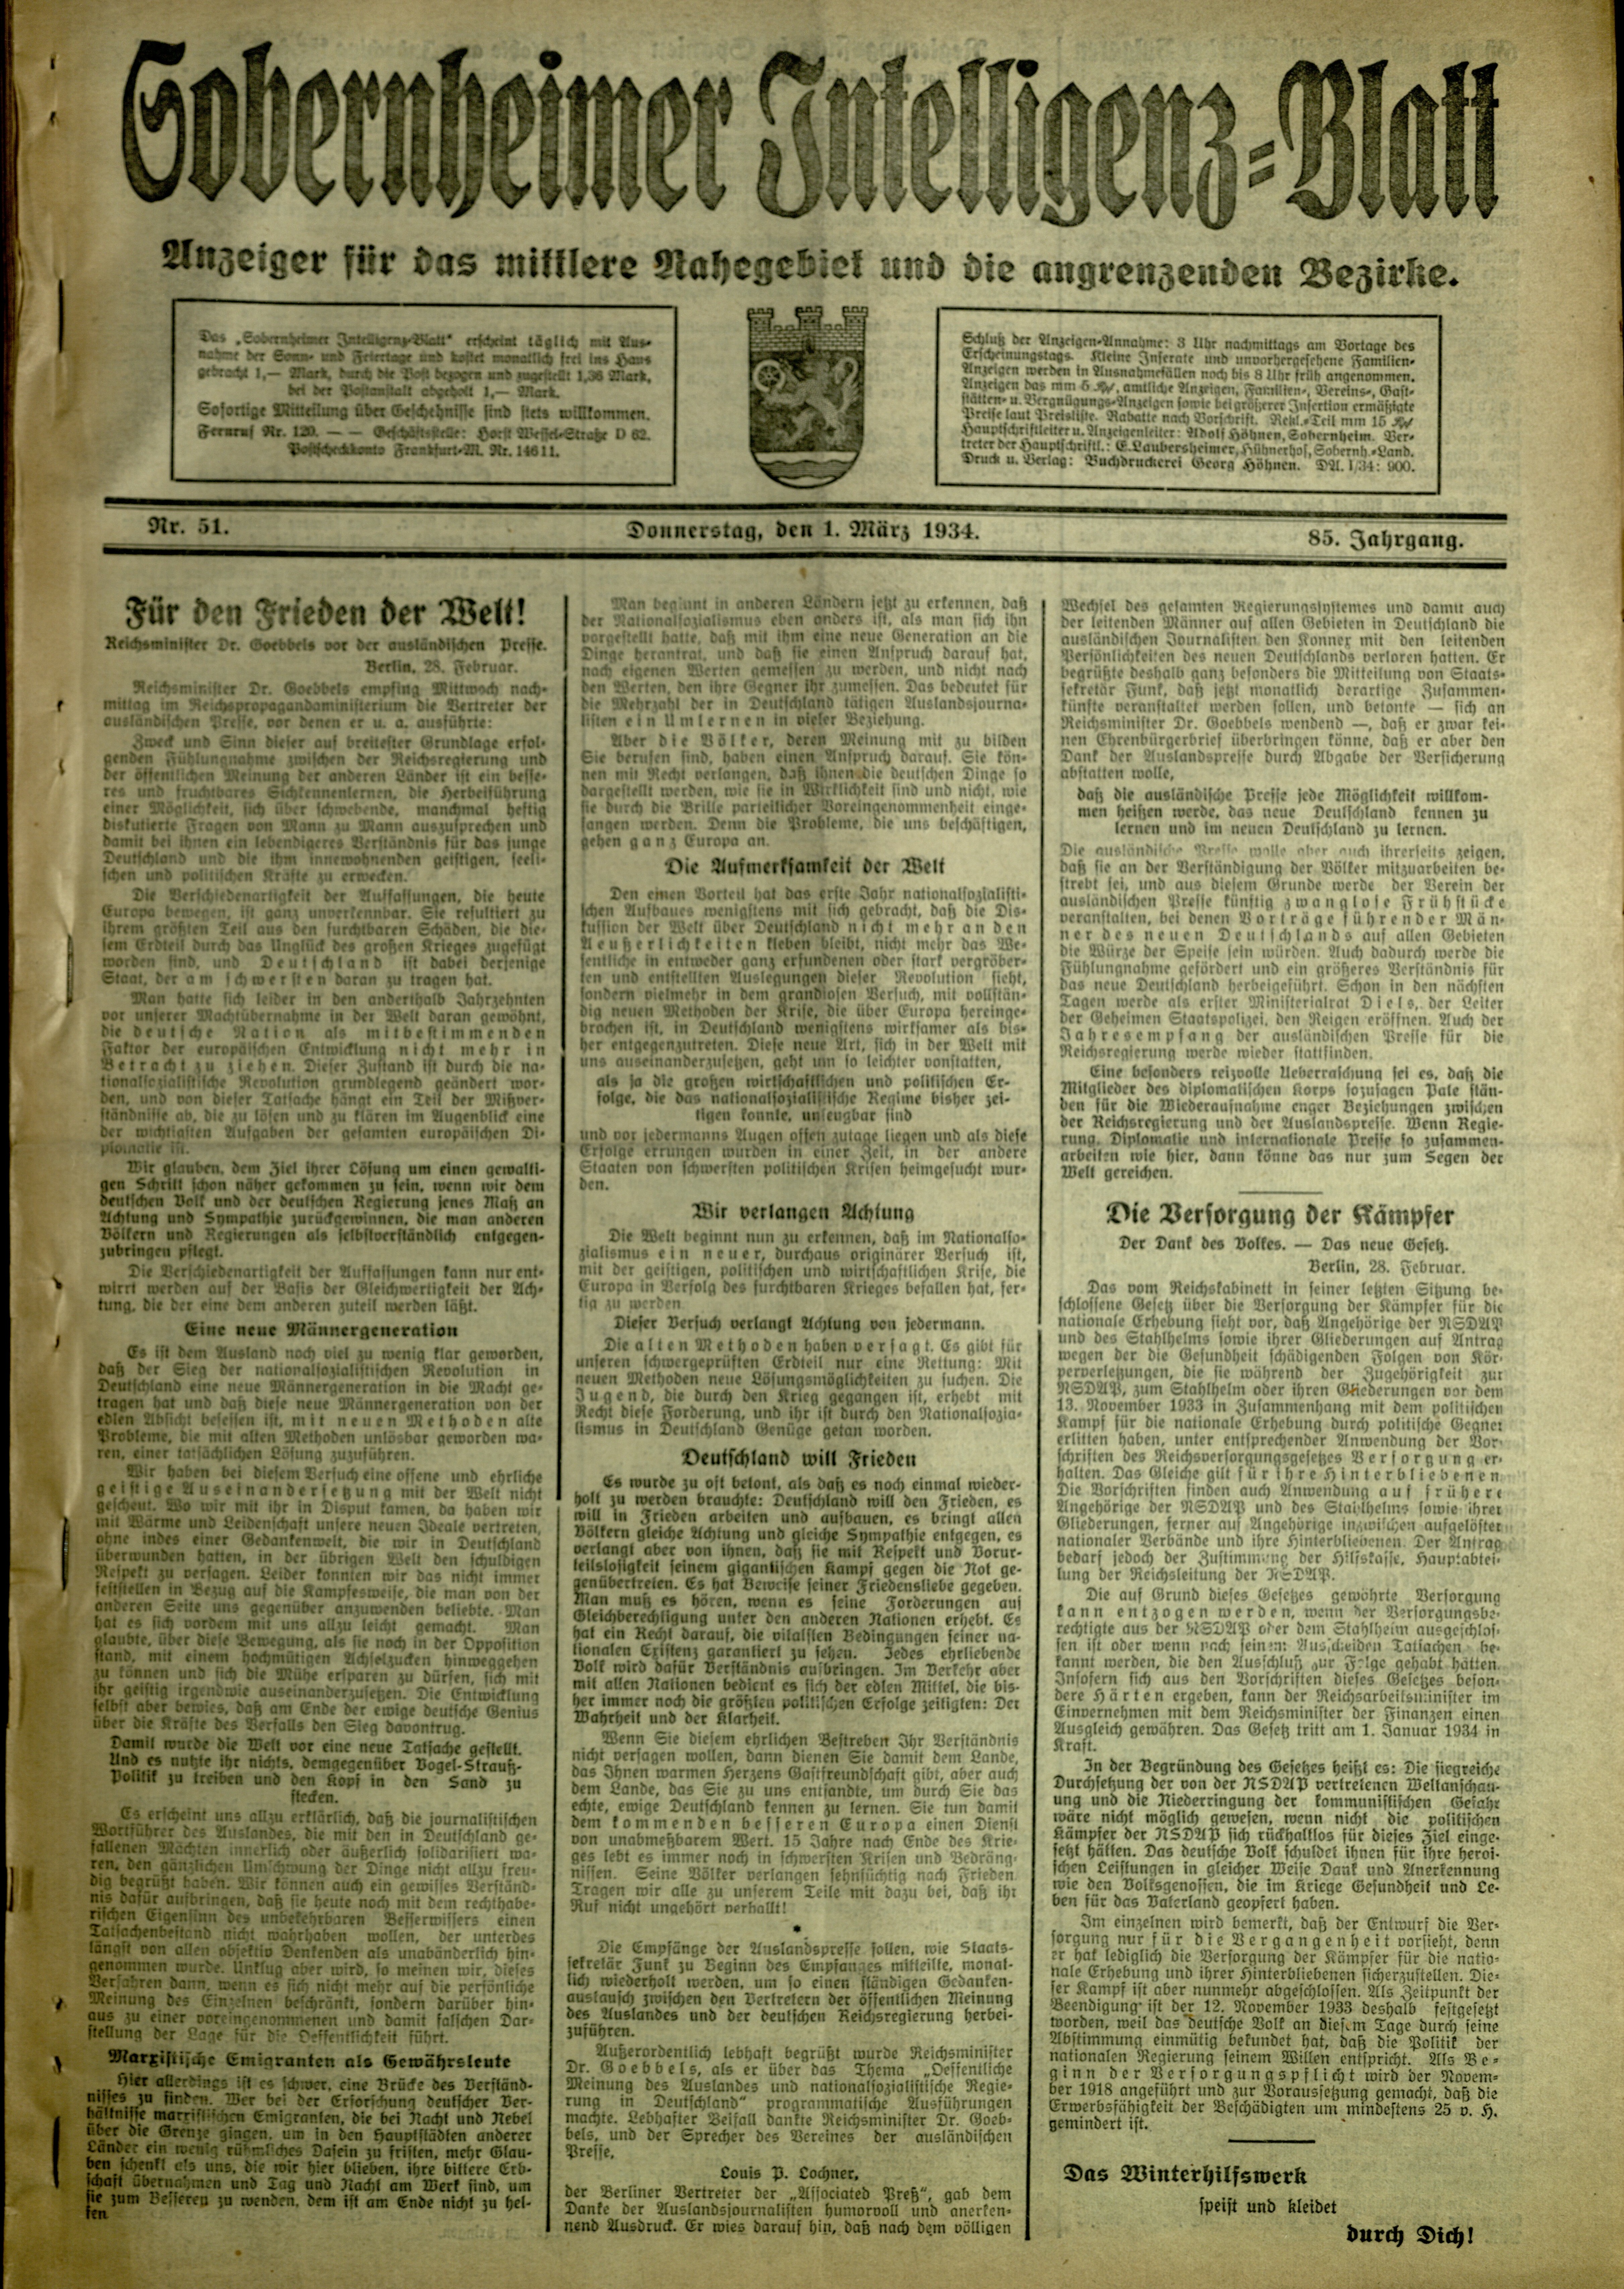 Zeitung: Sobernheimer Intelligenzblatt; März 1934, Jg. 85 Nr. 51 (Heimatmuseum Bad Sobernheim CC BY-NC-SA)